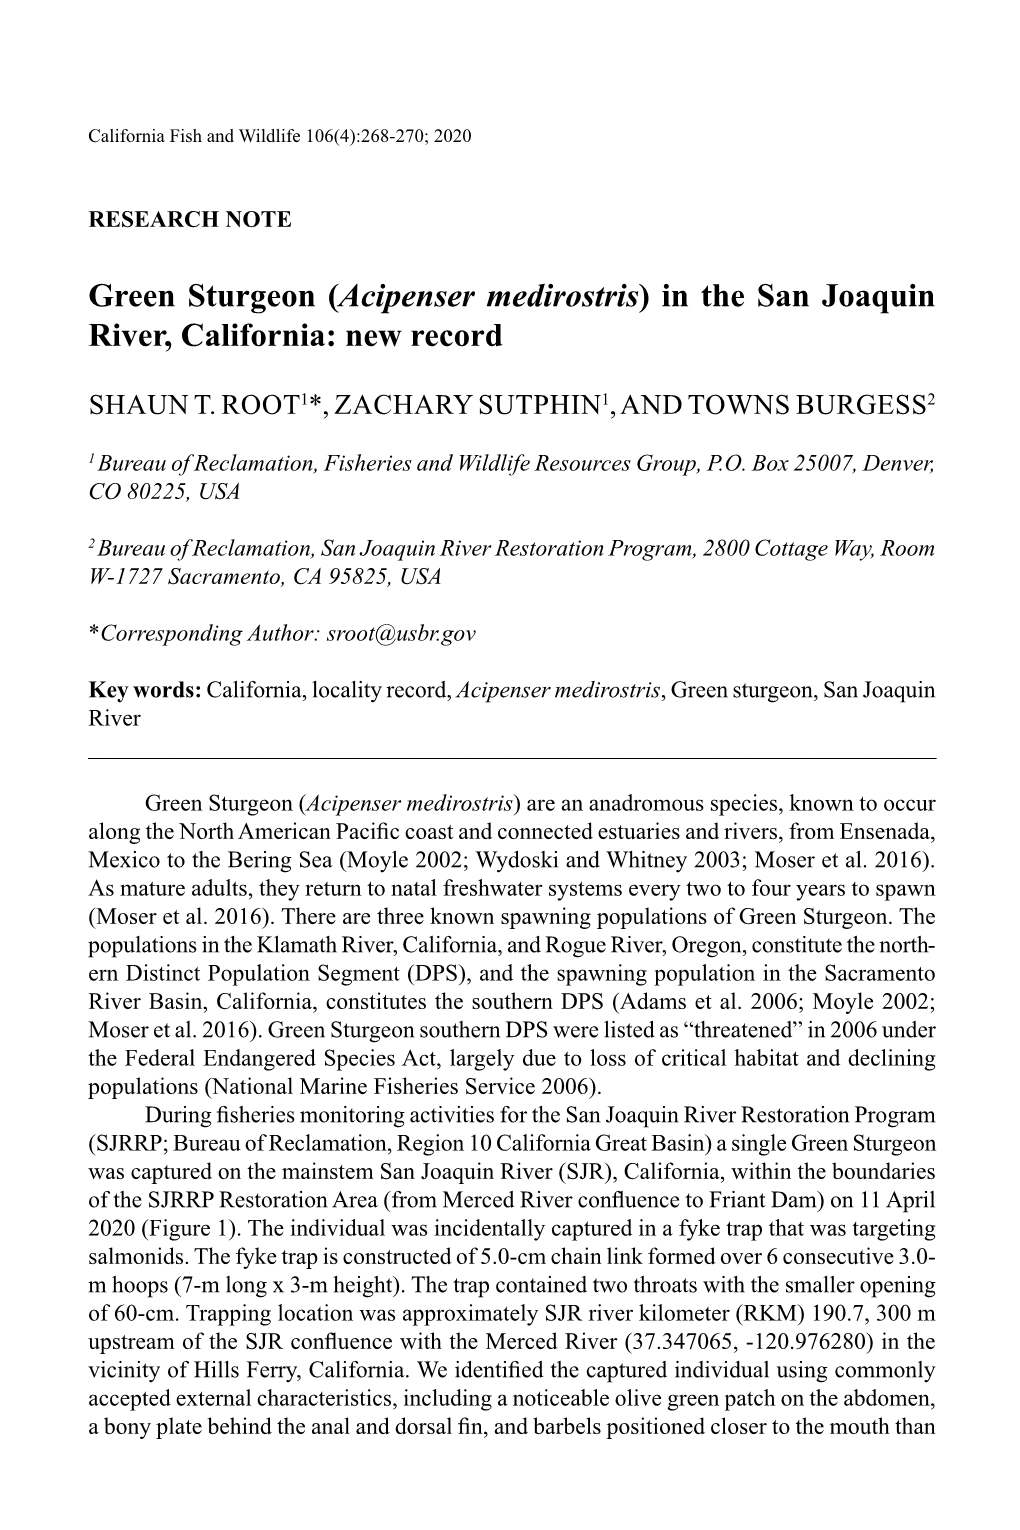 Green Sturgeon (Acipenser Medirostris) in the San Joaquin River, California: New Record